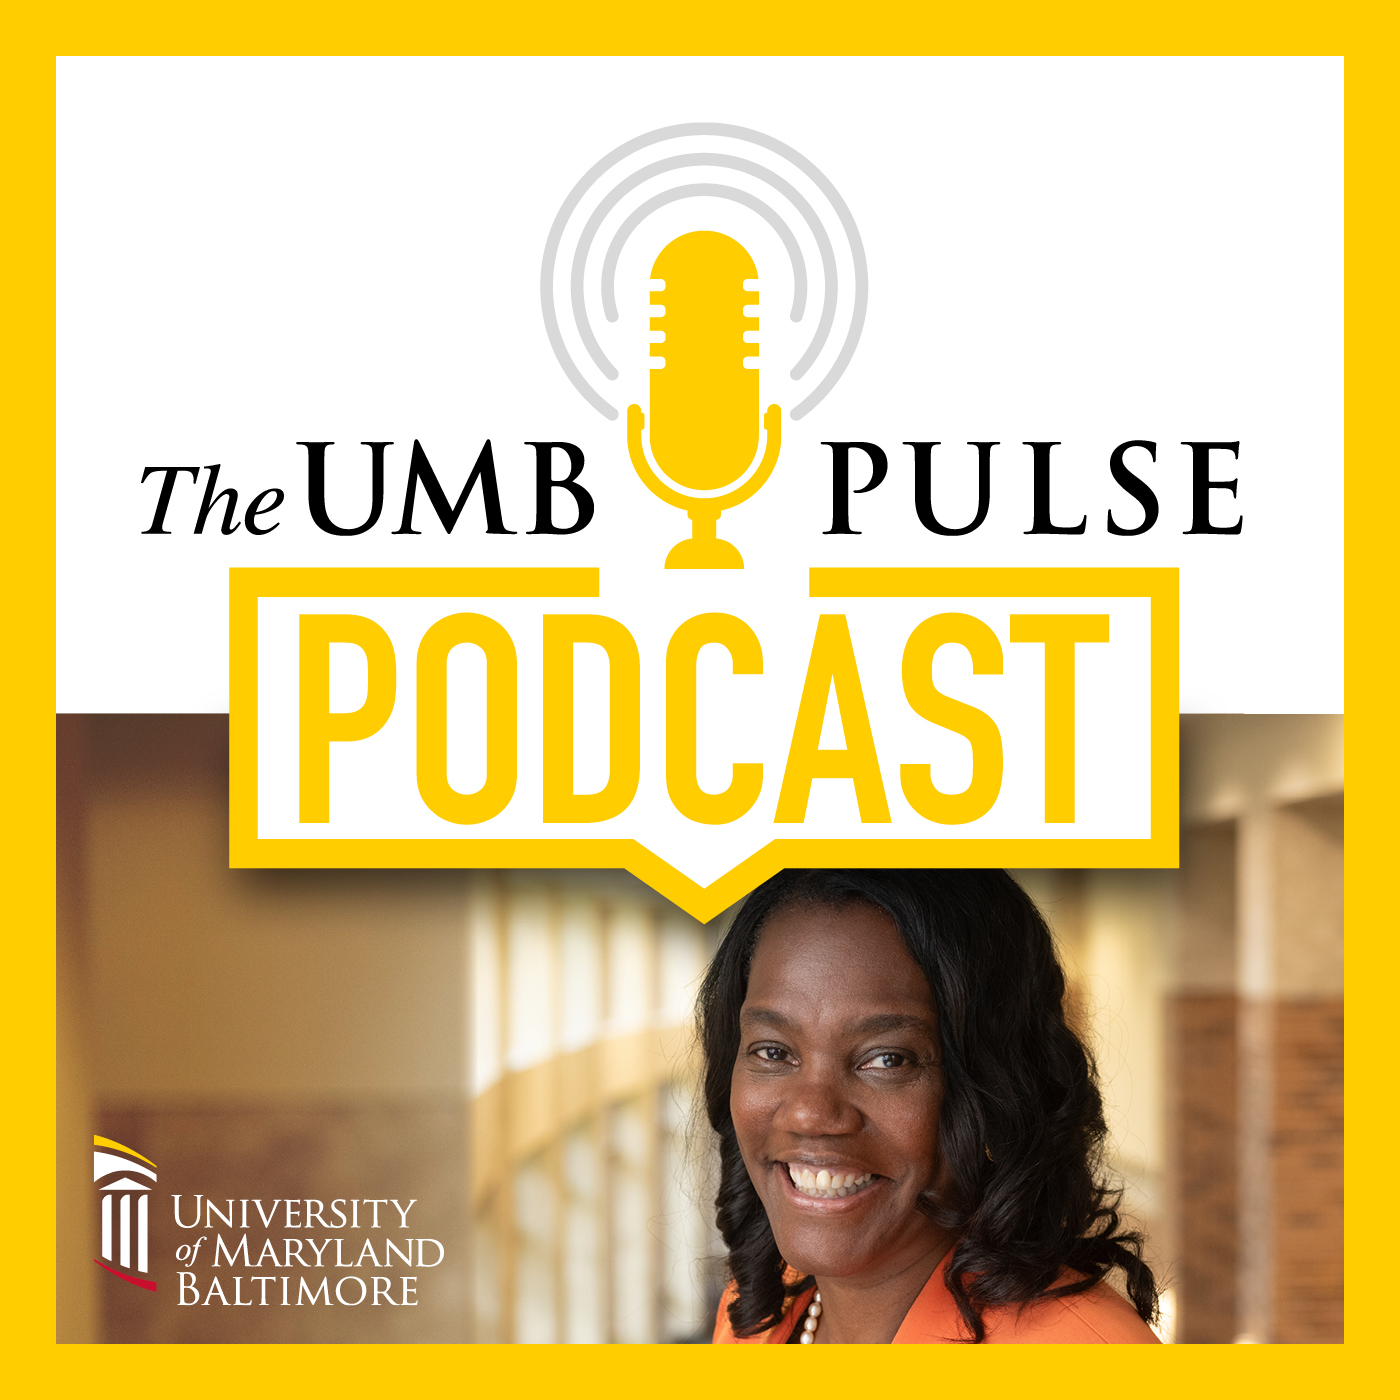 UMB Pulse Podcast graphic with Yolanda Ogbolu